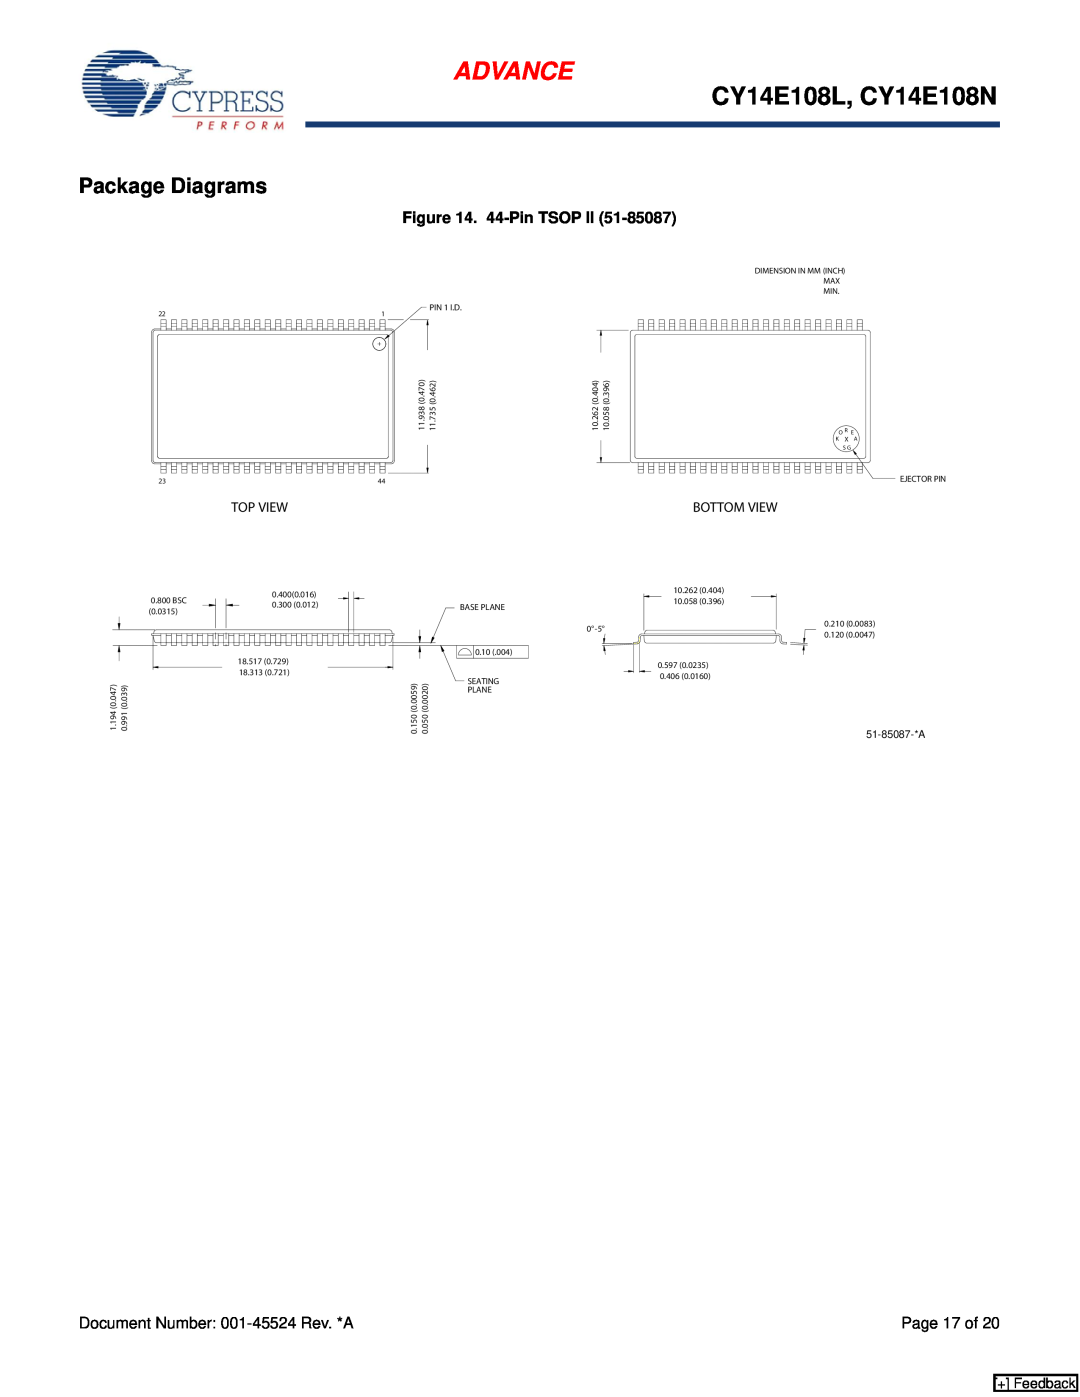 Cypress CY14B102N manual Package Diagrams, Advance, CY14E108L, CY14E108N, 44-Pin TSOP II, + Feedback 